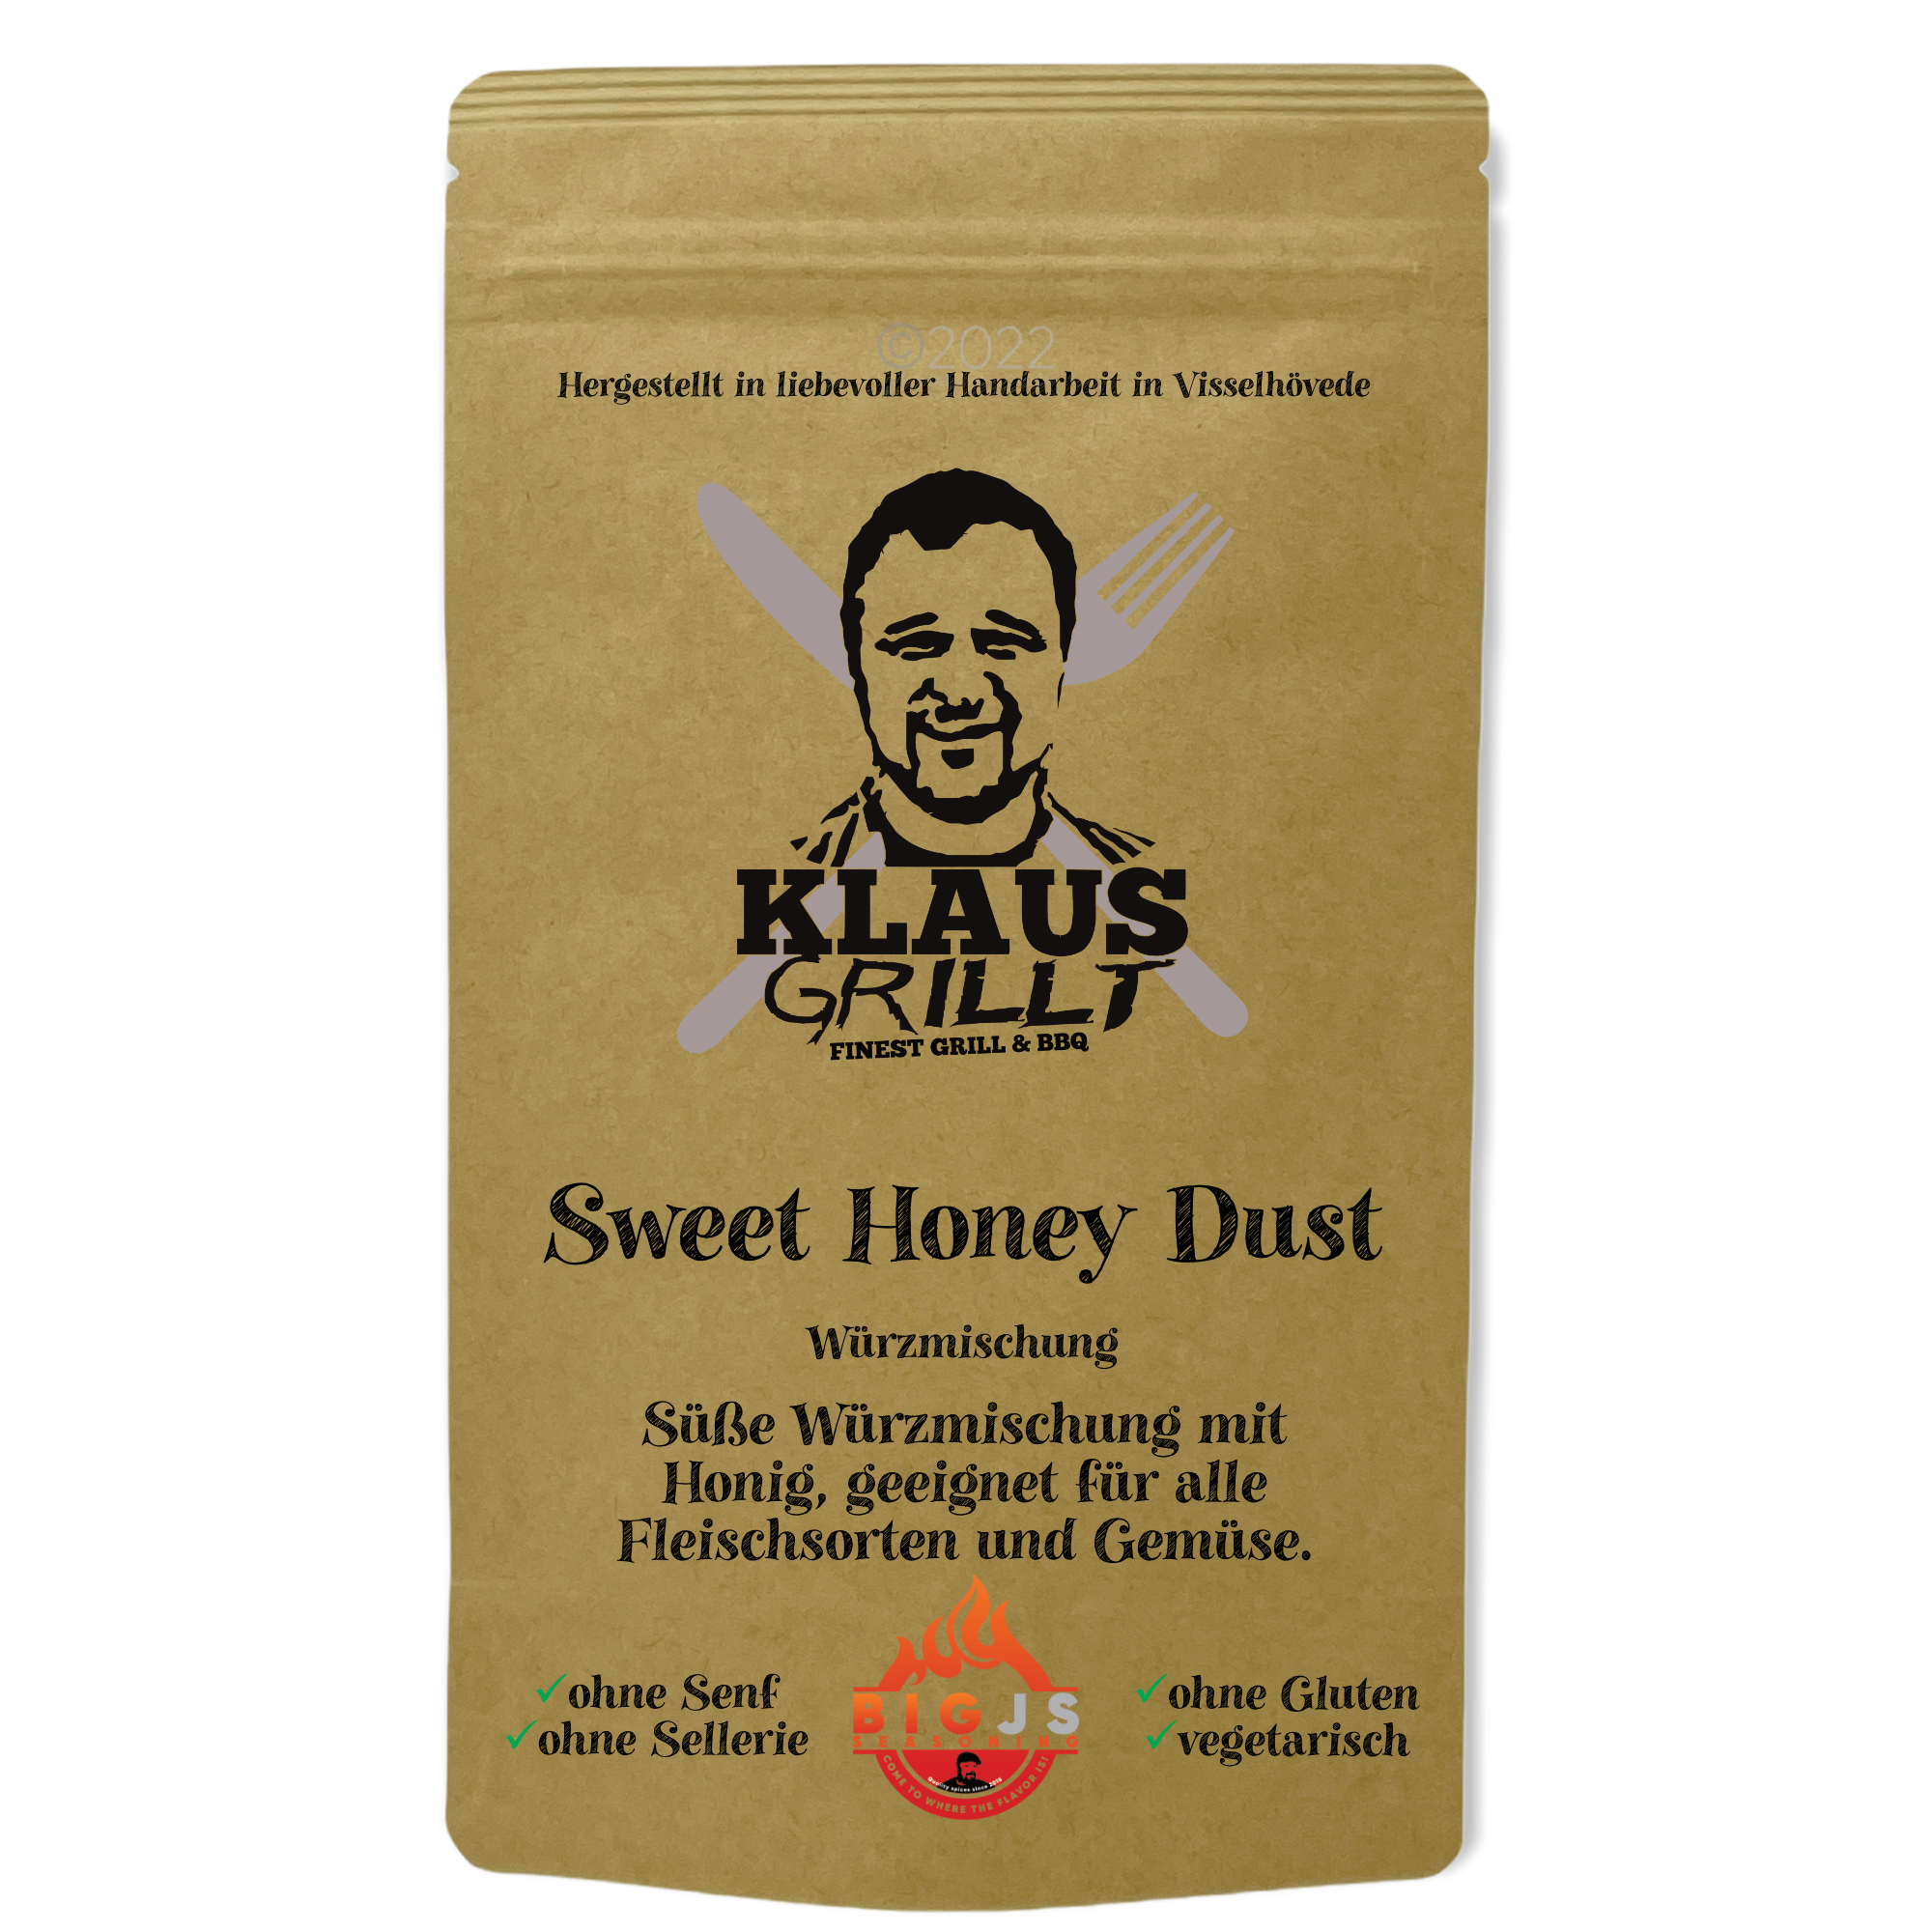 Klaus grillt Sweet Honey Dust 250g Beutel